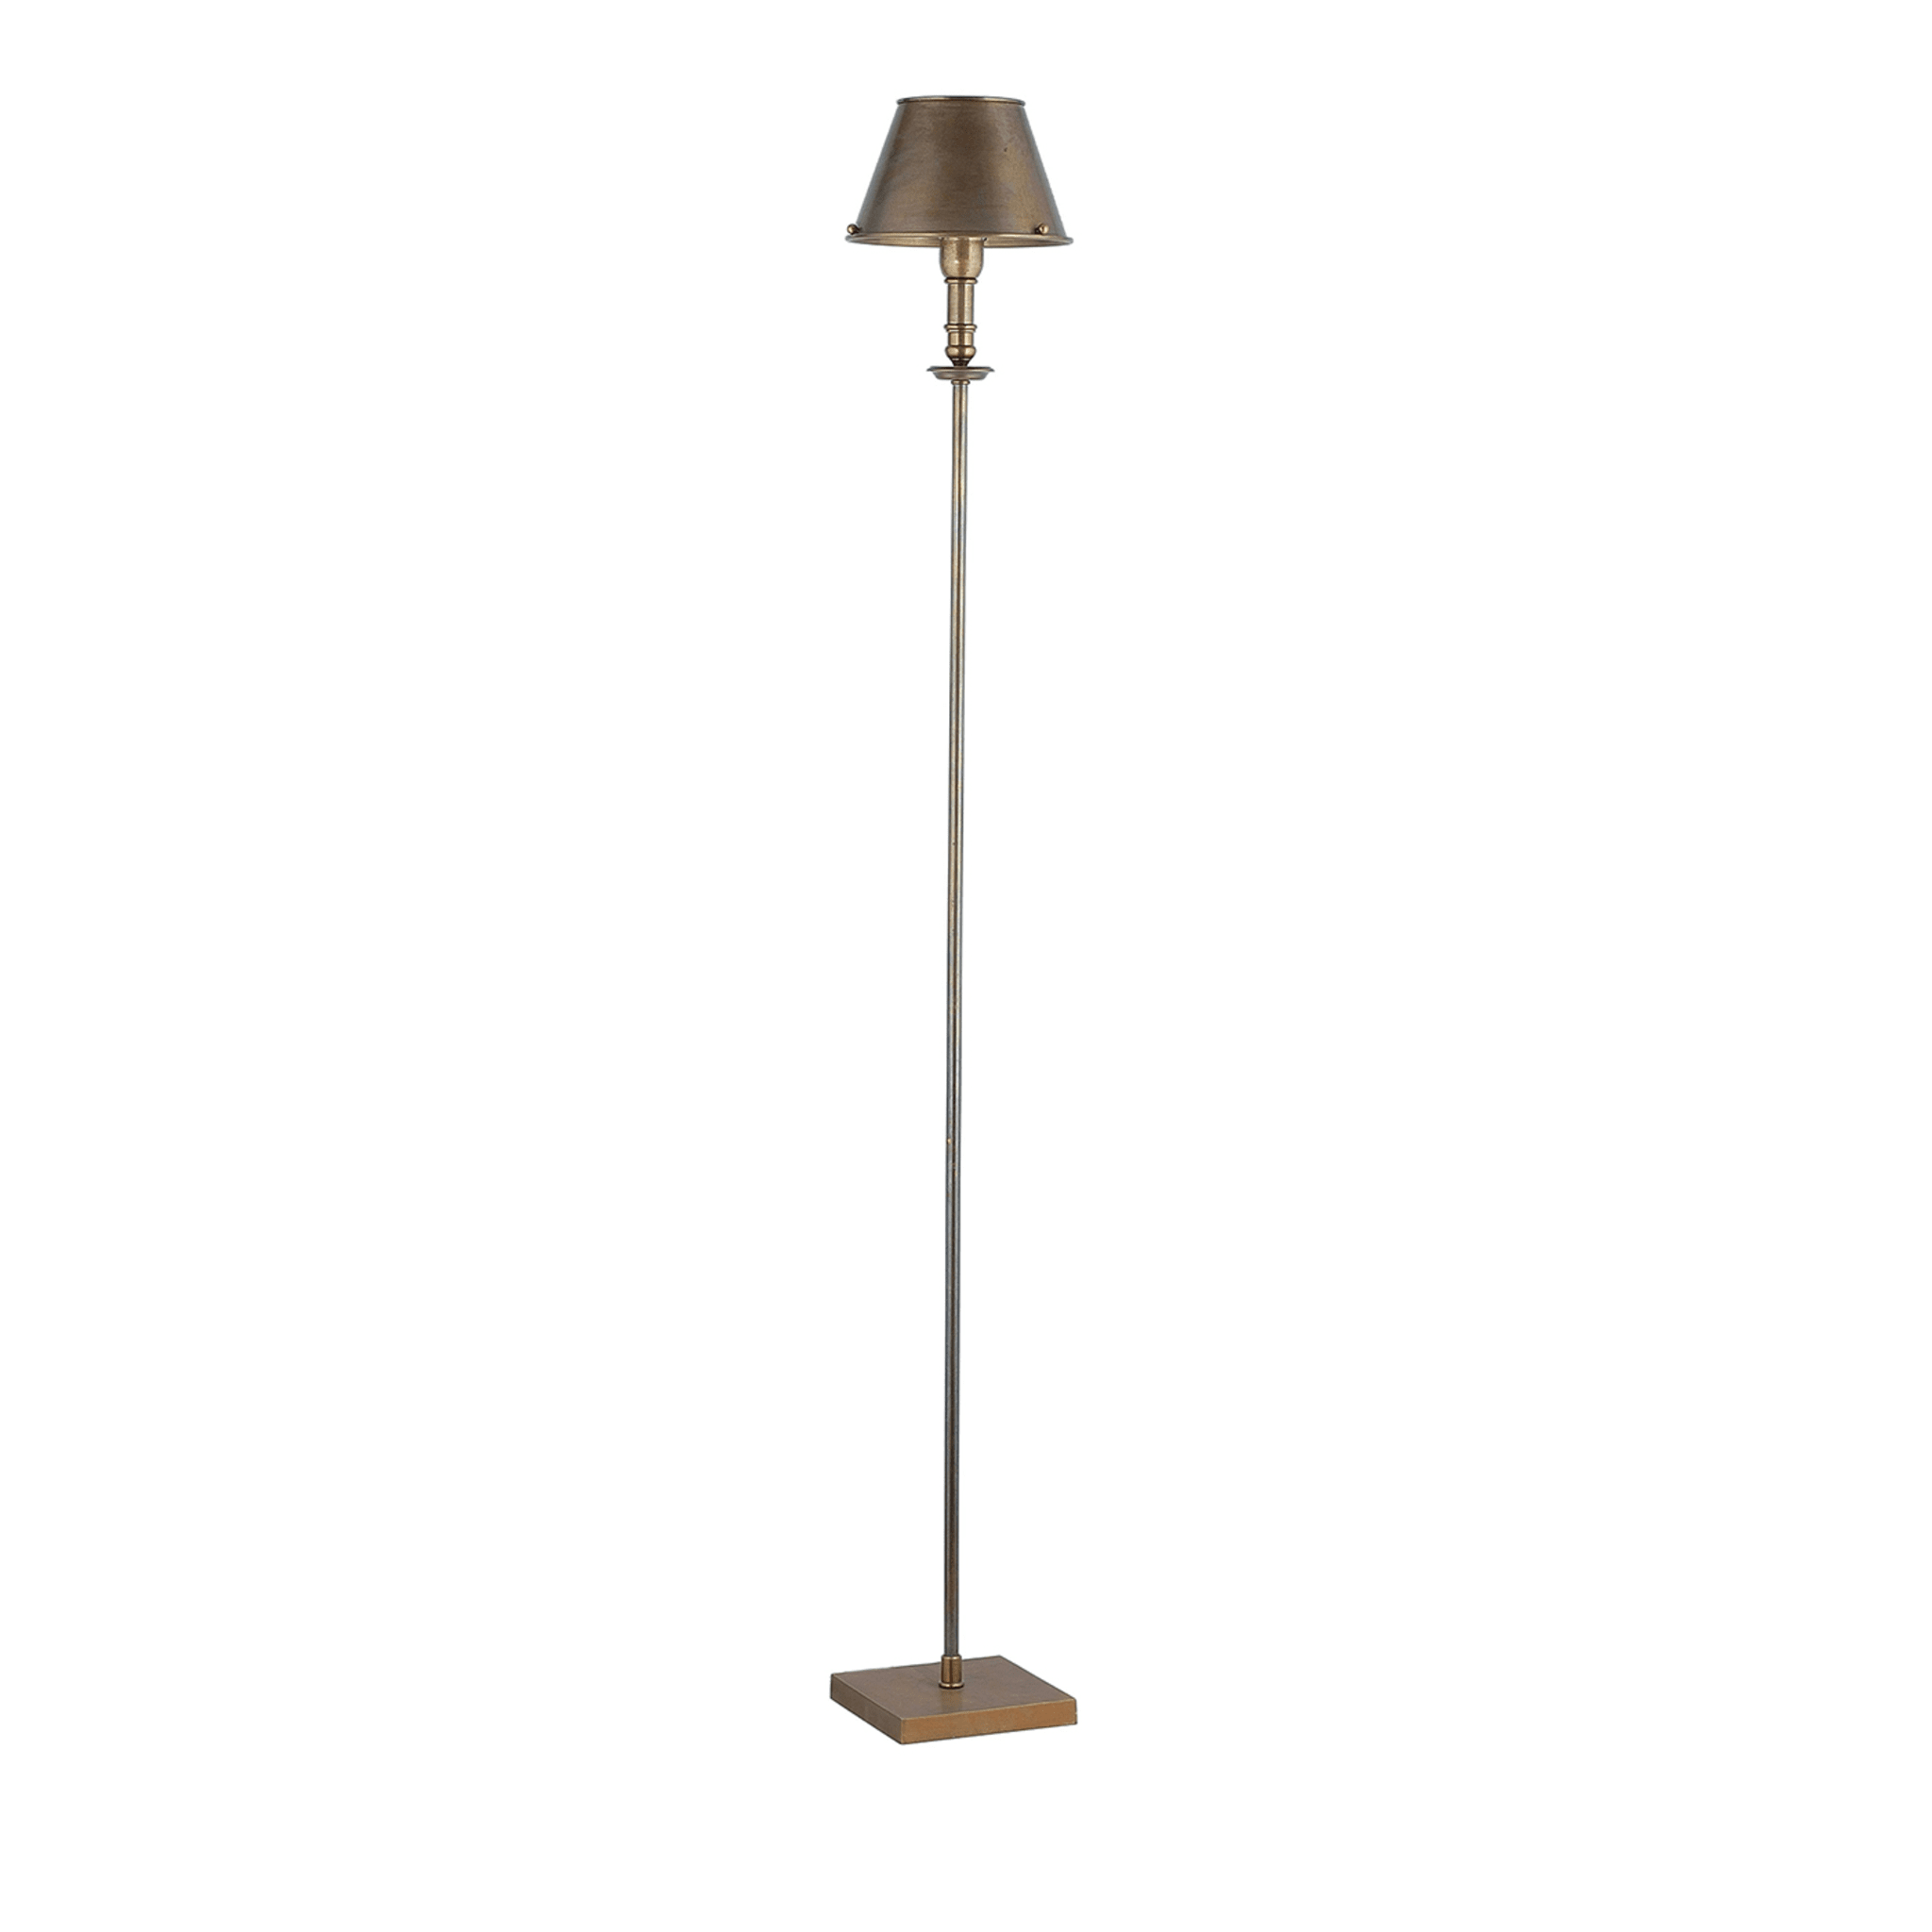 Kuria M478 Brushed Bronze Floor Lamp by Michele Bönan - Main view